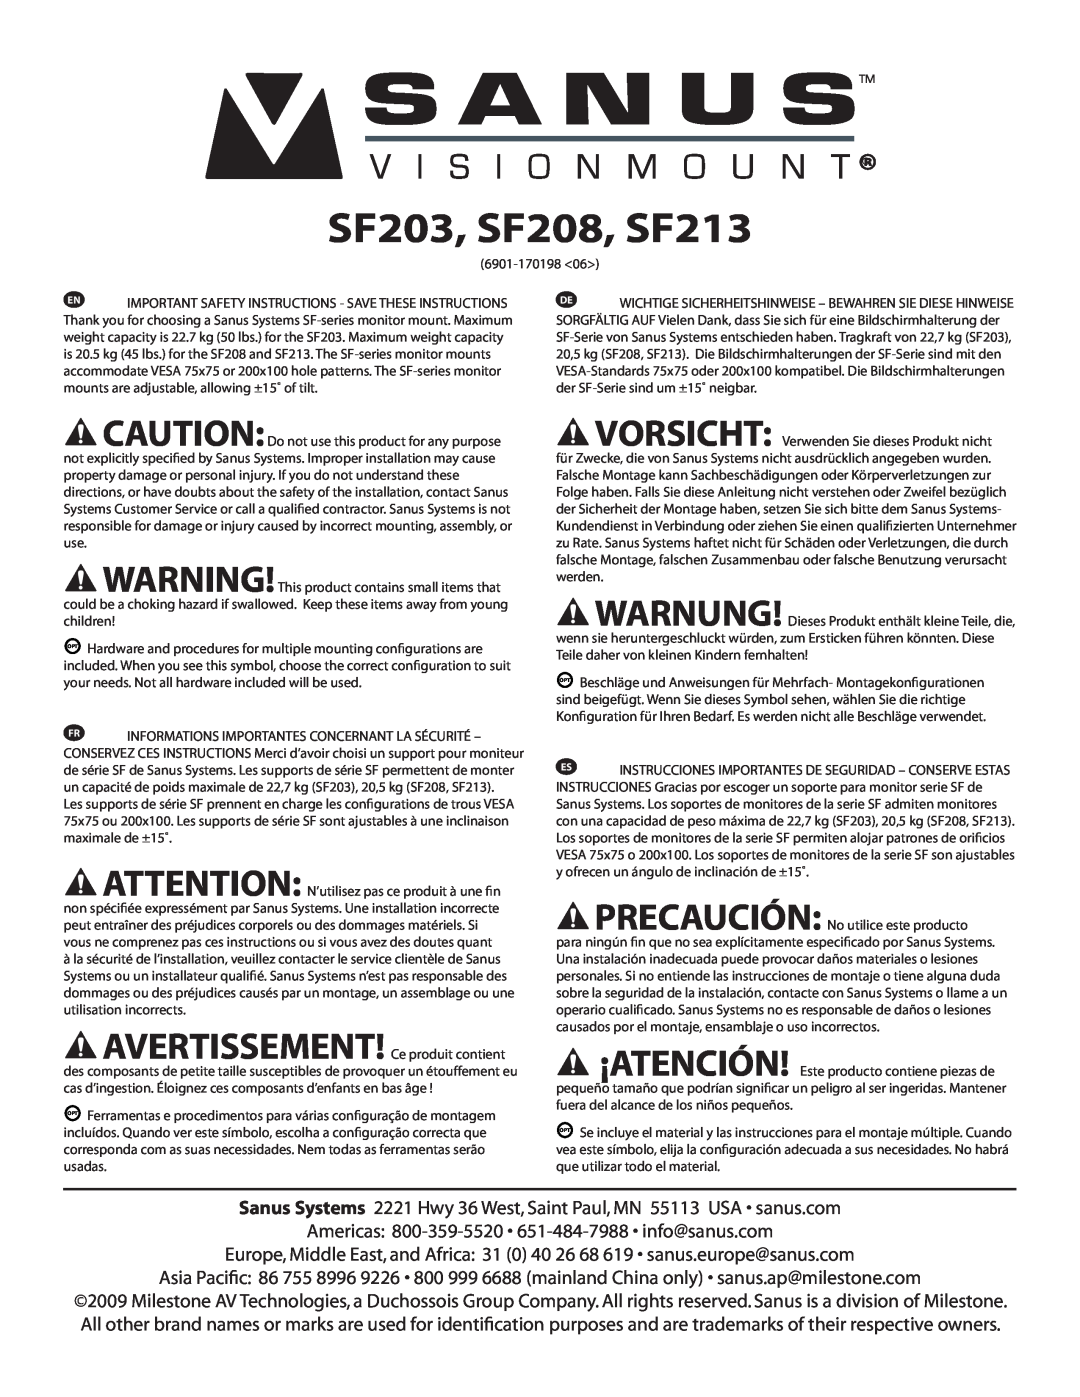 Sanus Systems important safety instructions SF203, SF208, SF213, Americas 800-359-5520 651-484-7988 info@sanus.com 